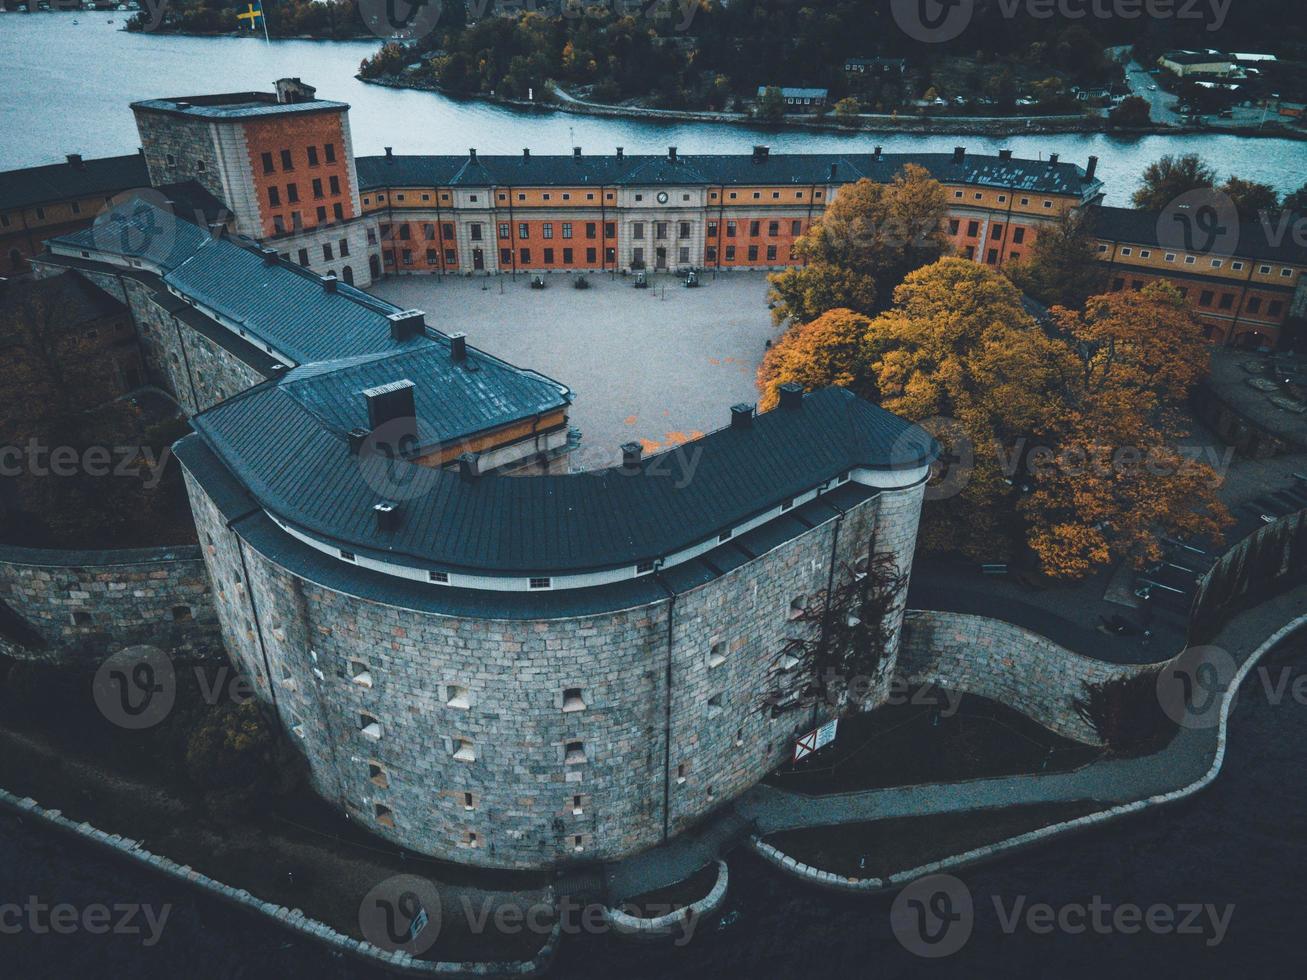 Vaxholm Castle by Drone in Vaxholm, Sweden photo